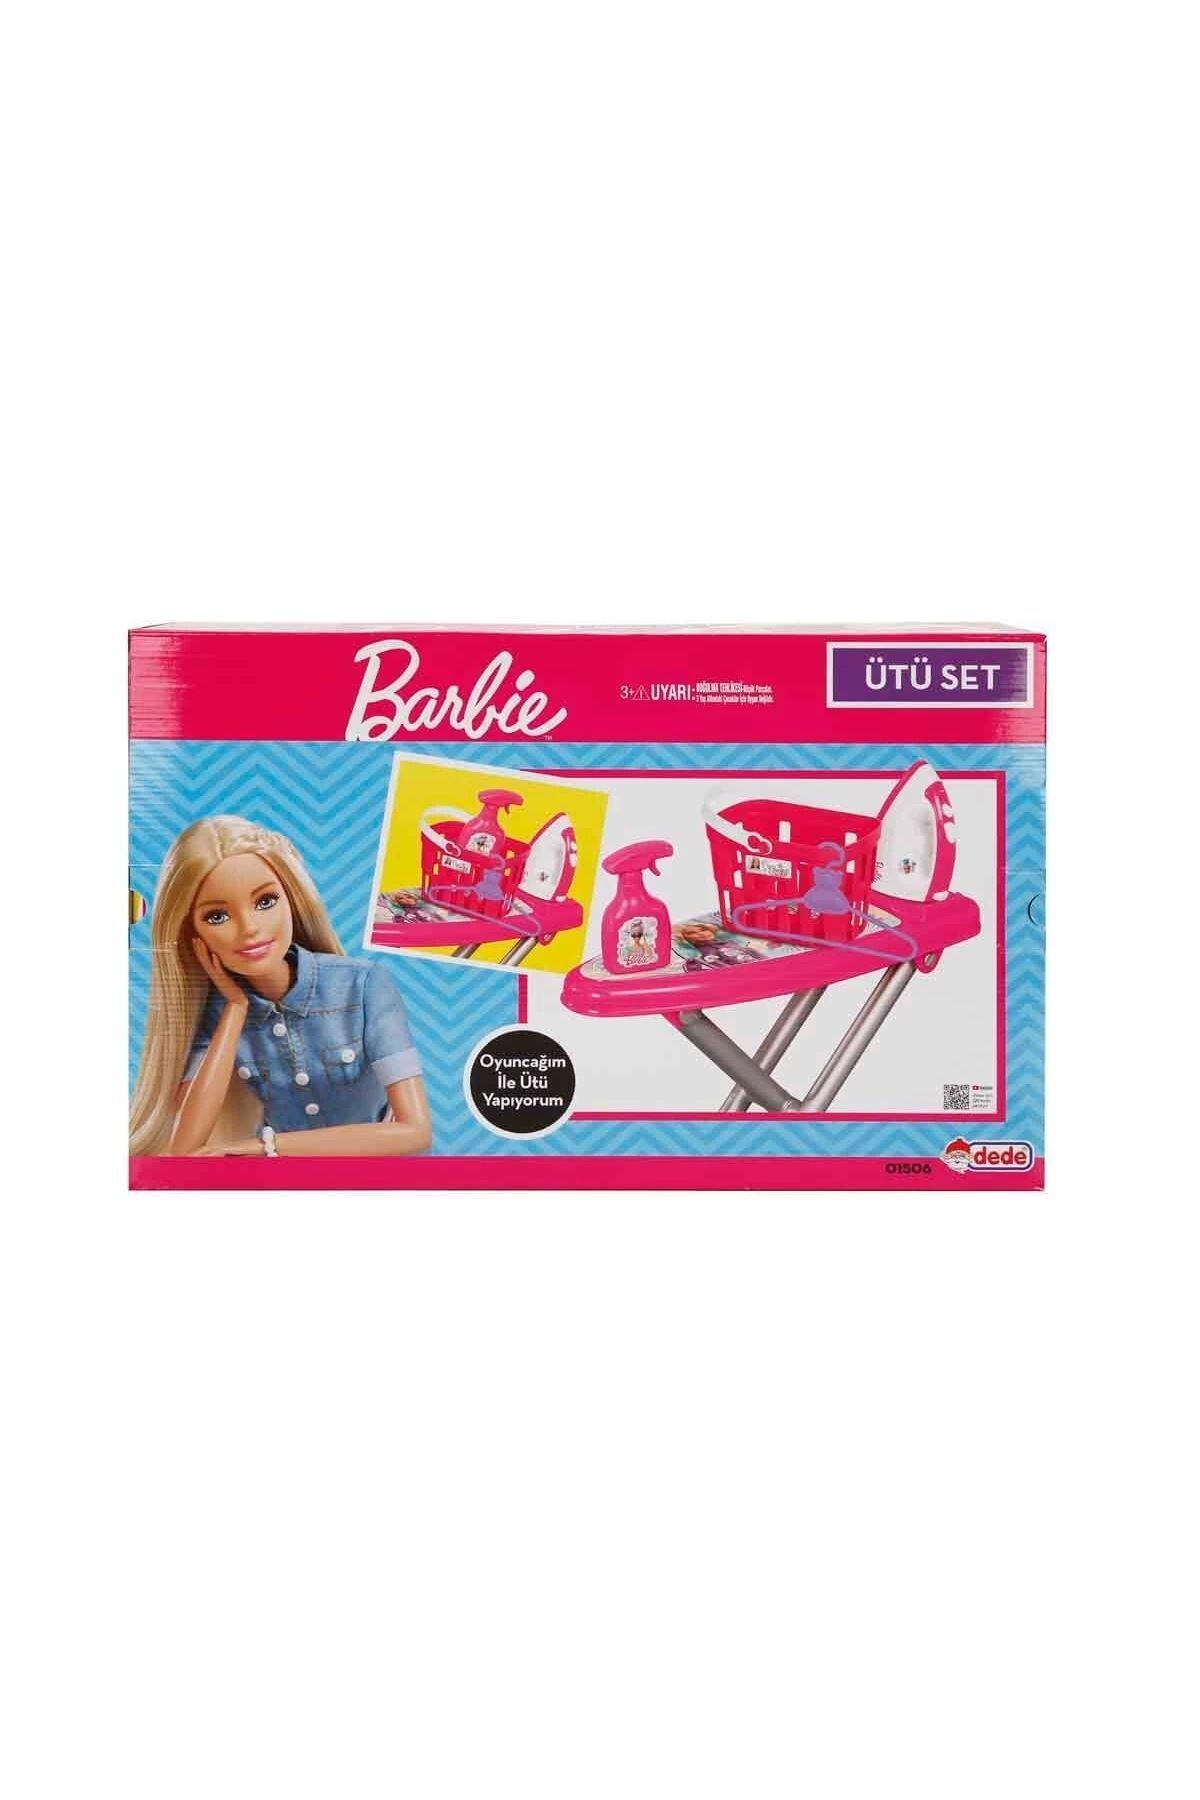 DEDE Barbie Ütü Seti 01506